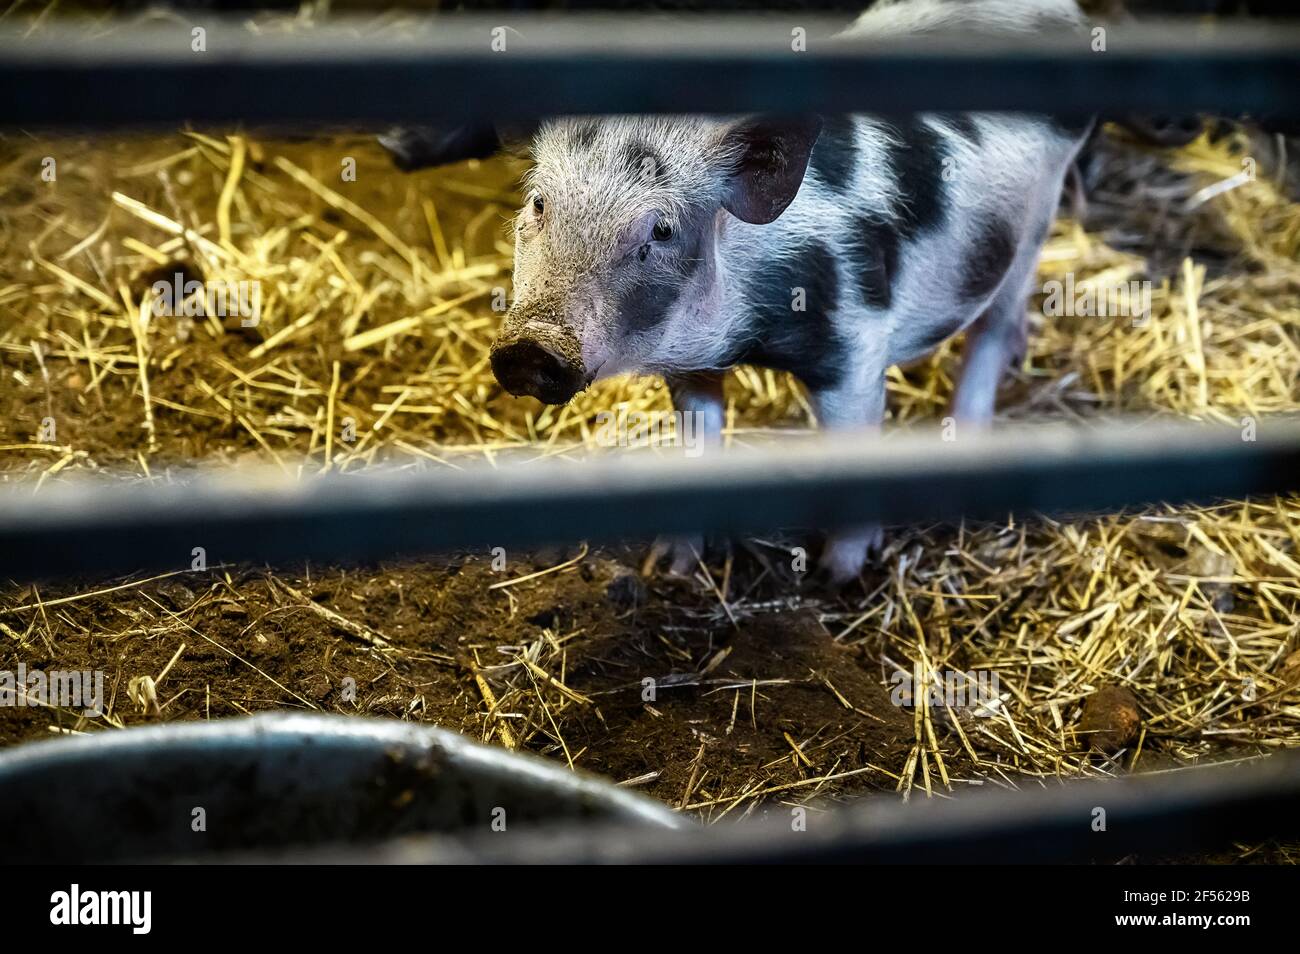 A small Vietnamese mini pig behing barns of pig pen Stock Photo